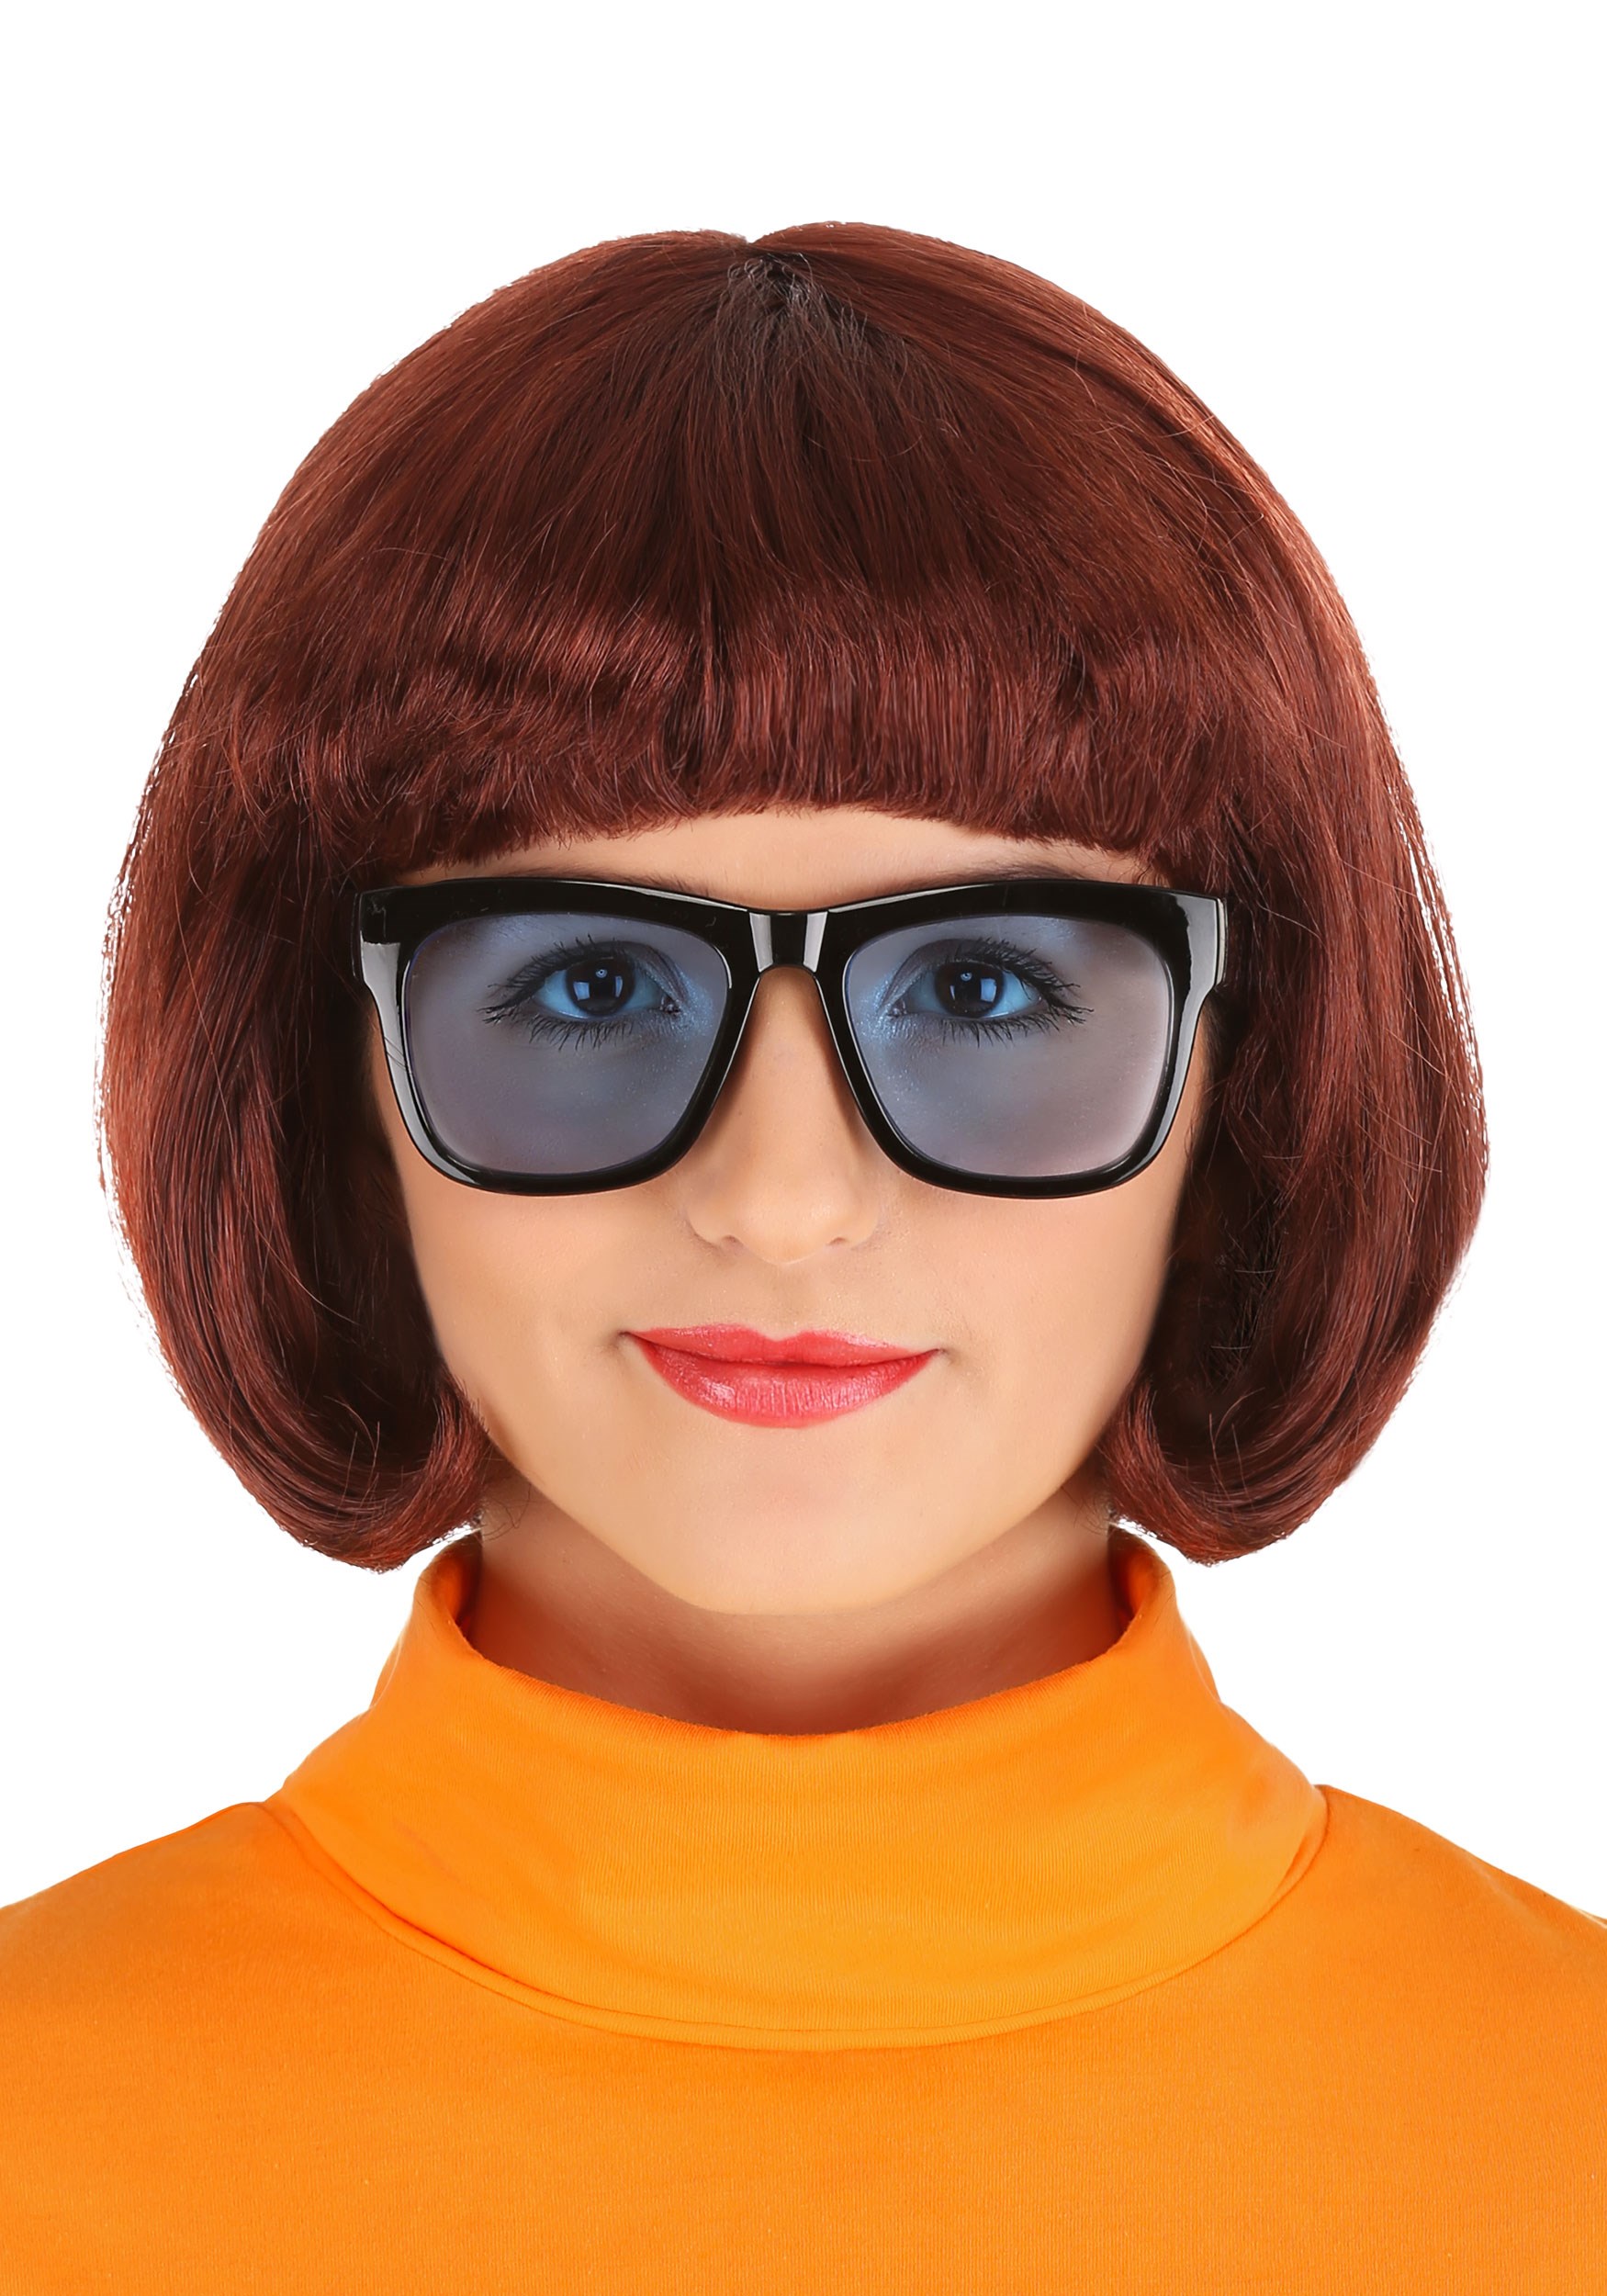 Barbie Velma Scooby Doo | lupon.gov.ph